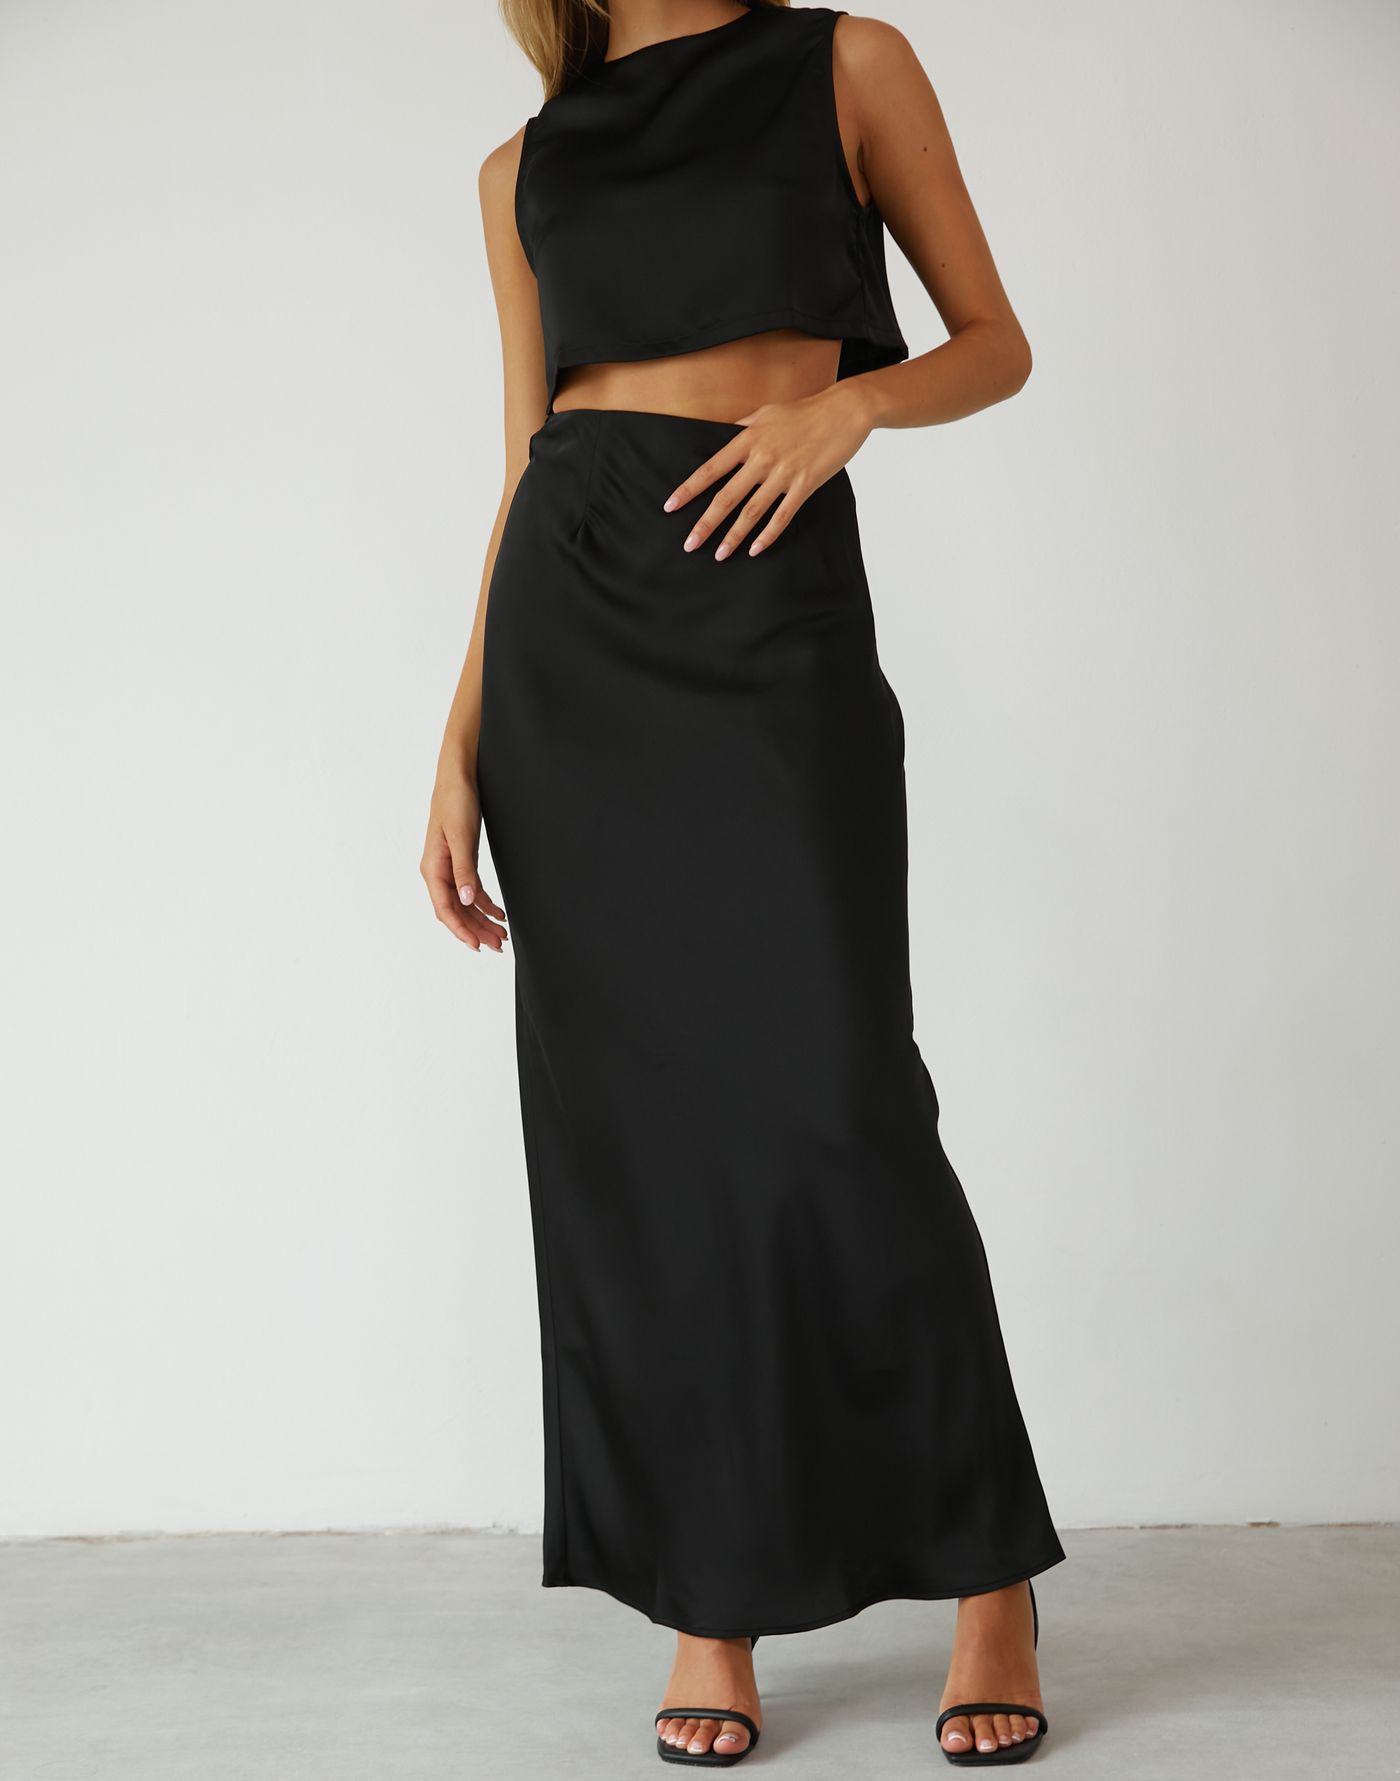 Sincerity Maxi Skirt (Black) - Black Satin High Waisted Skirt - Women's Skirt - Charcoal Clothing